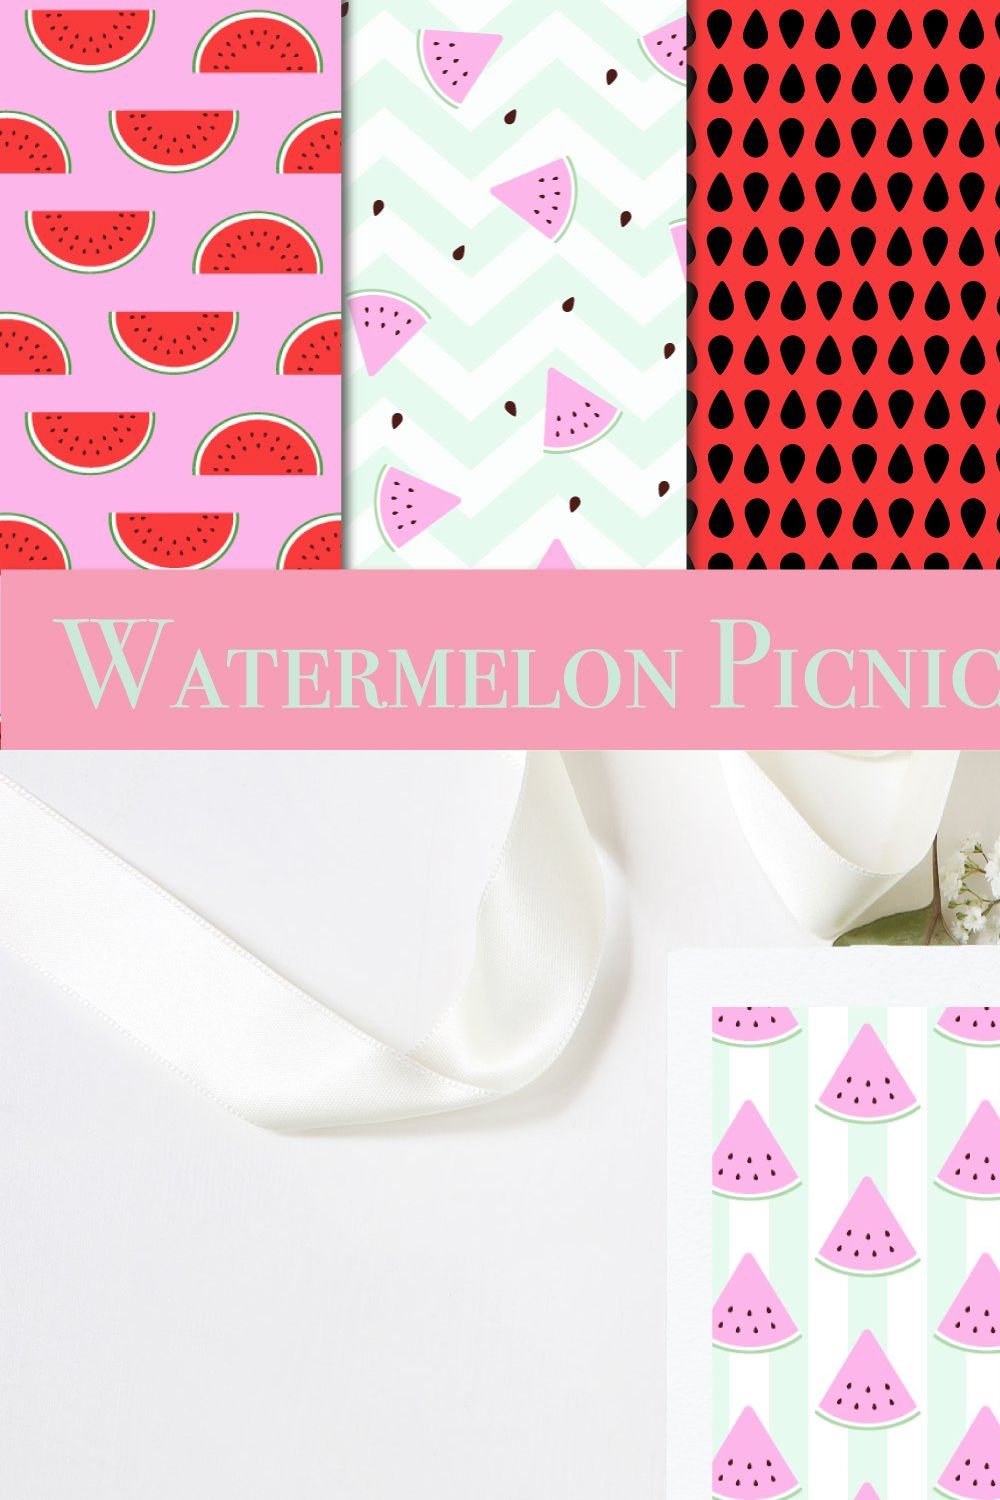 Watermelon Picnic Patterns pinterest preview image.